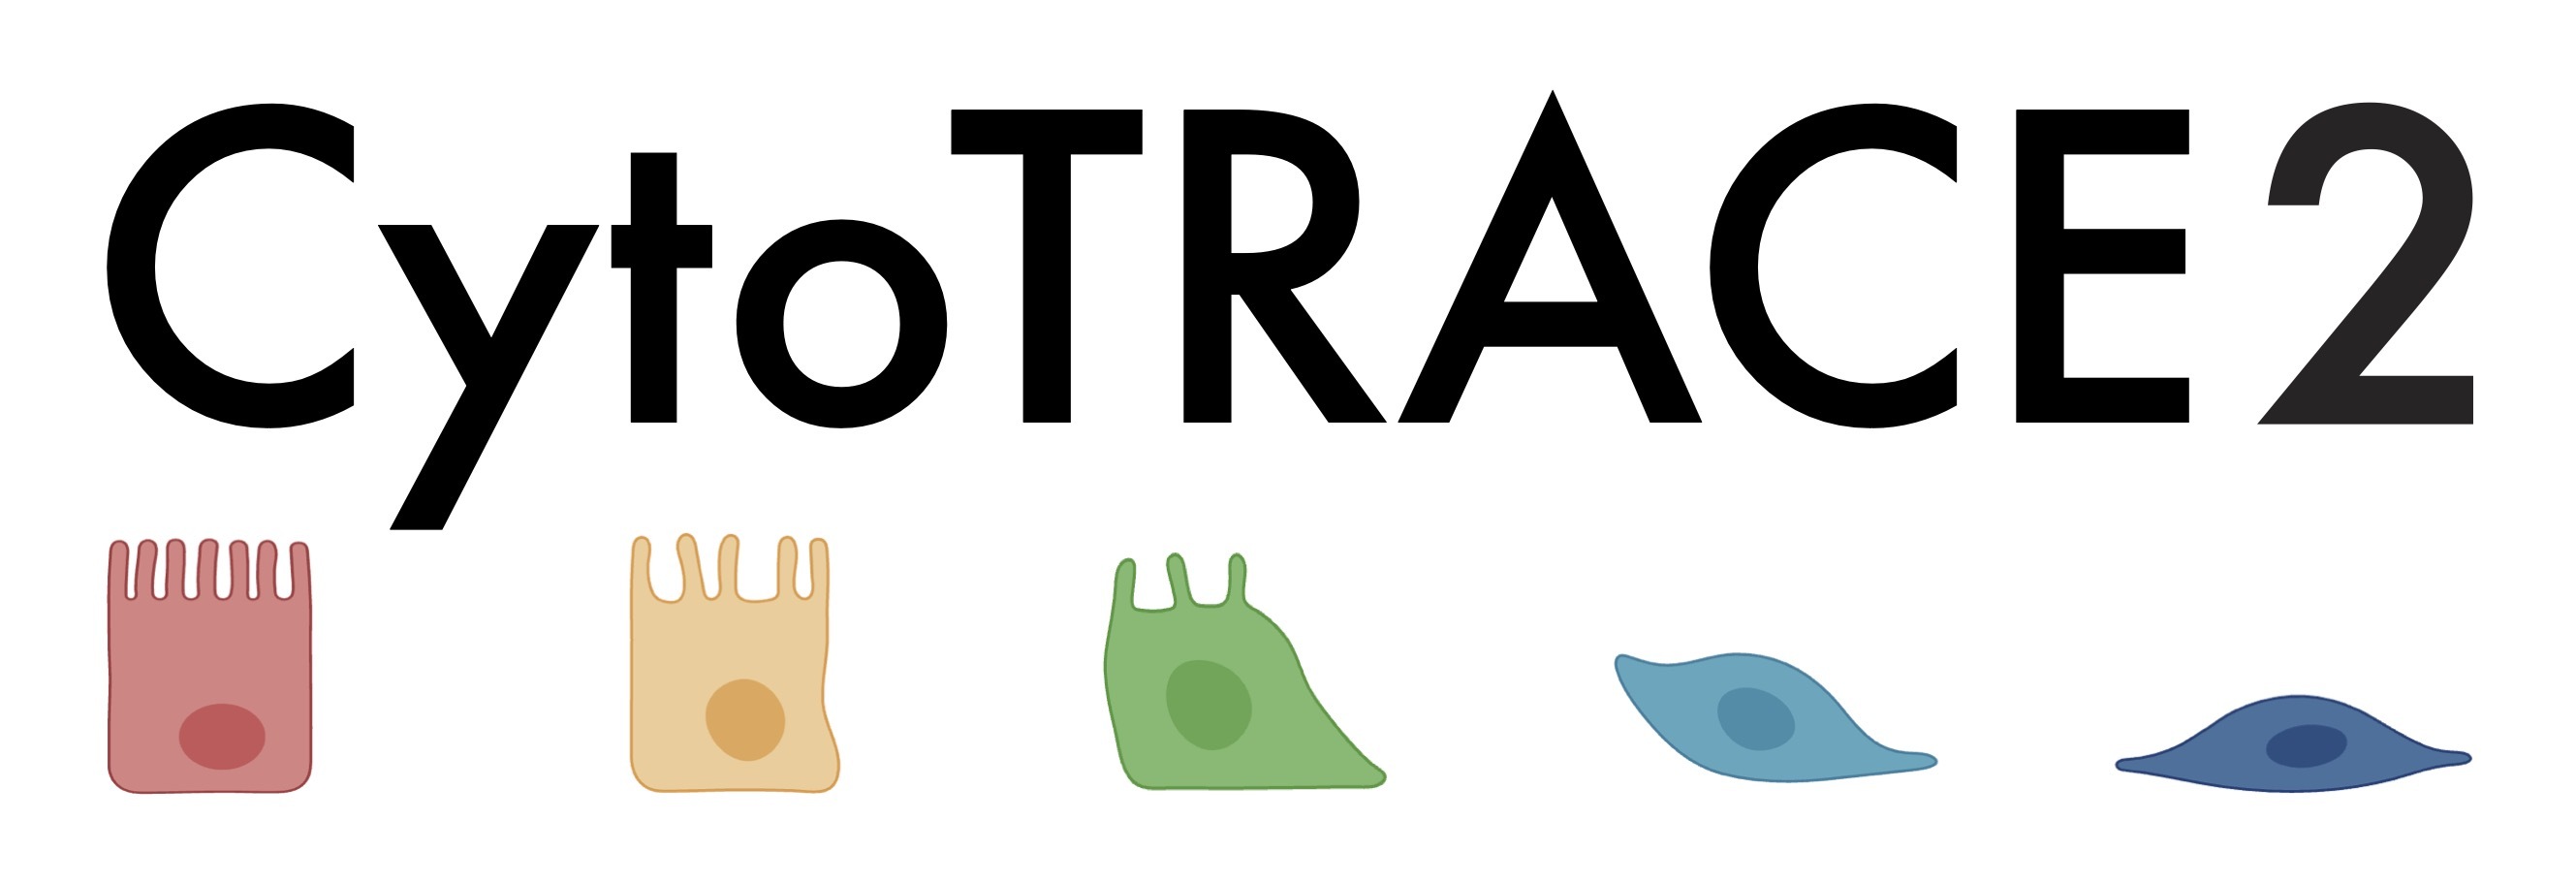 cytotrace2_logo